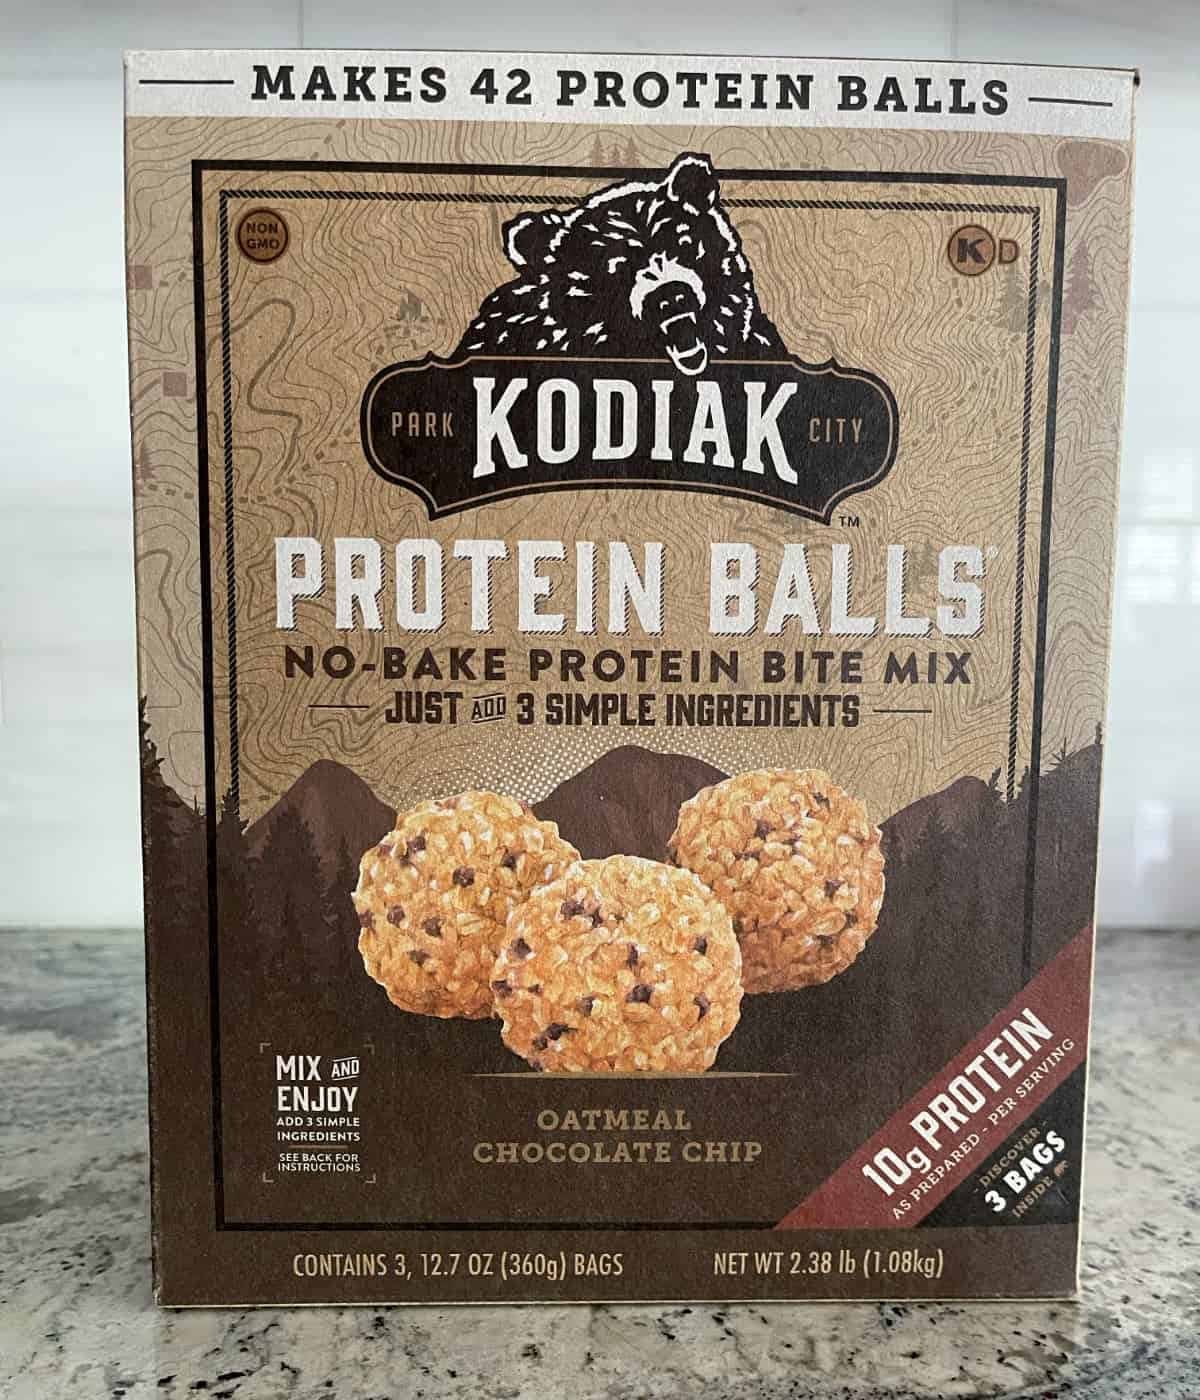 Box of Kodiak no-bake oatmeal chocolate chip protein bite mix.